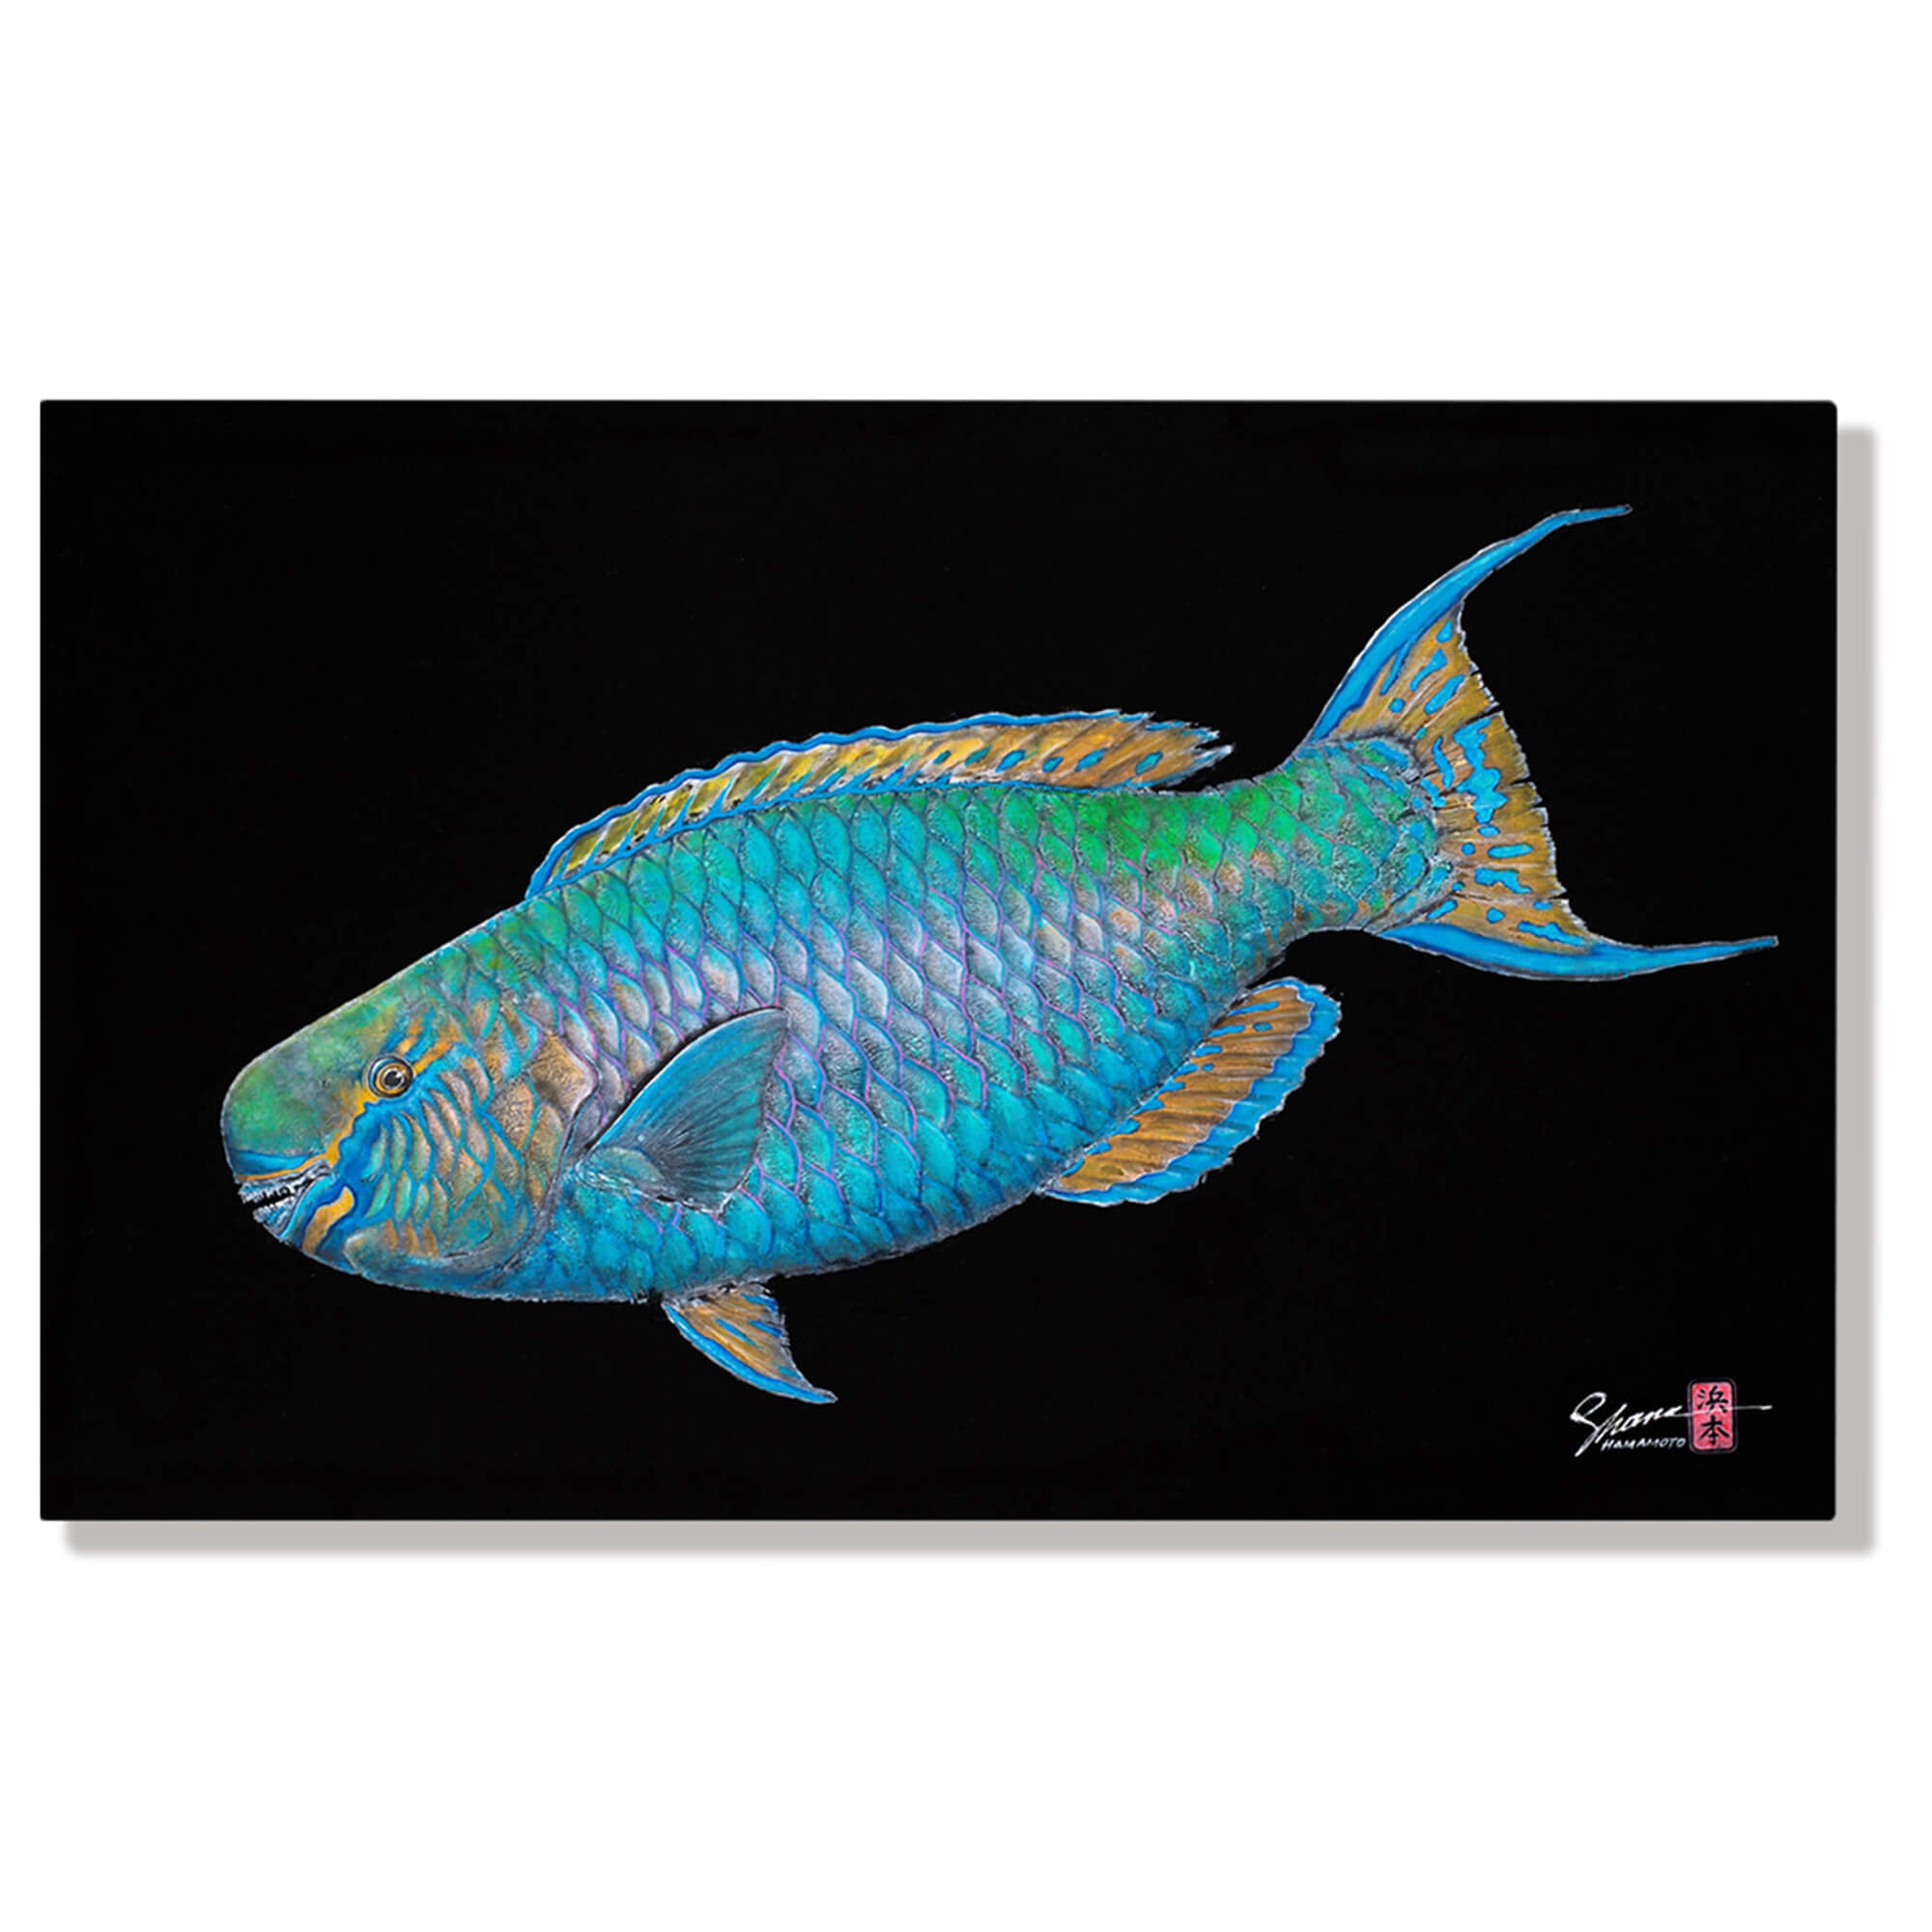 Metal print of Uhu ( also known as Parrotfish) by Hawaii gyotaku artist Shane Hamamoto